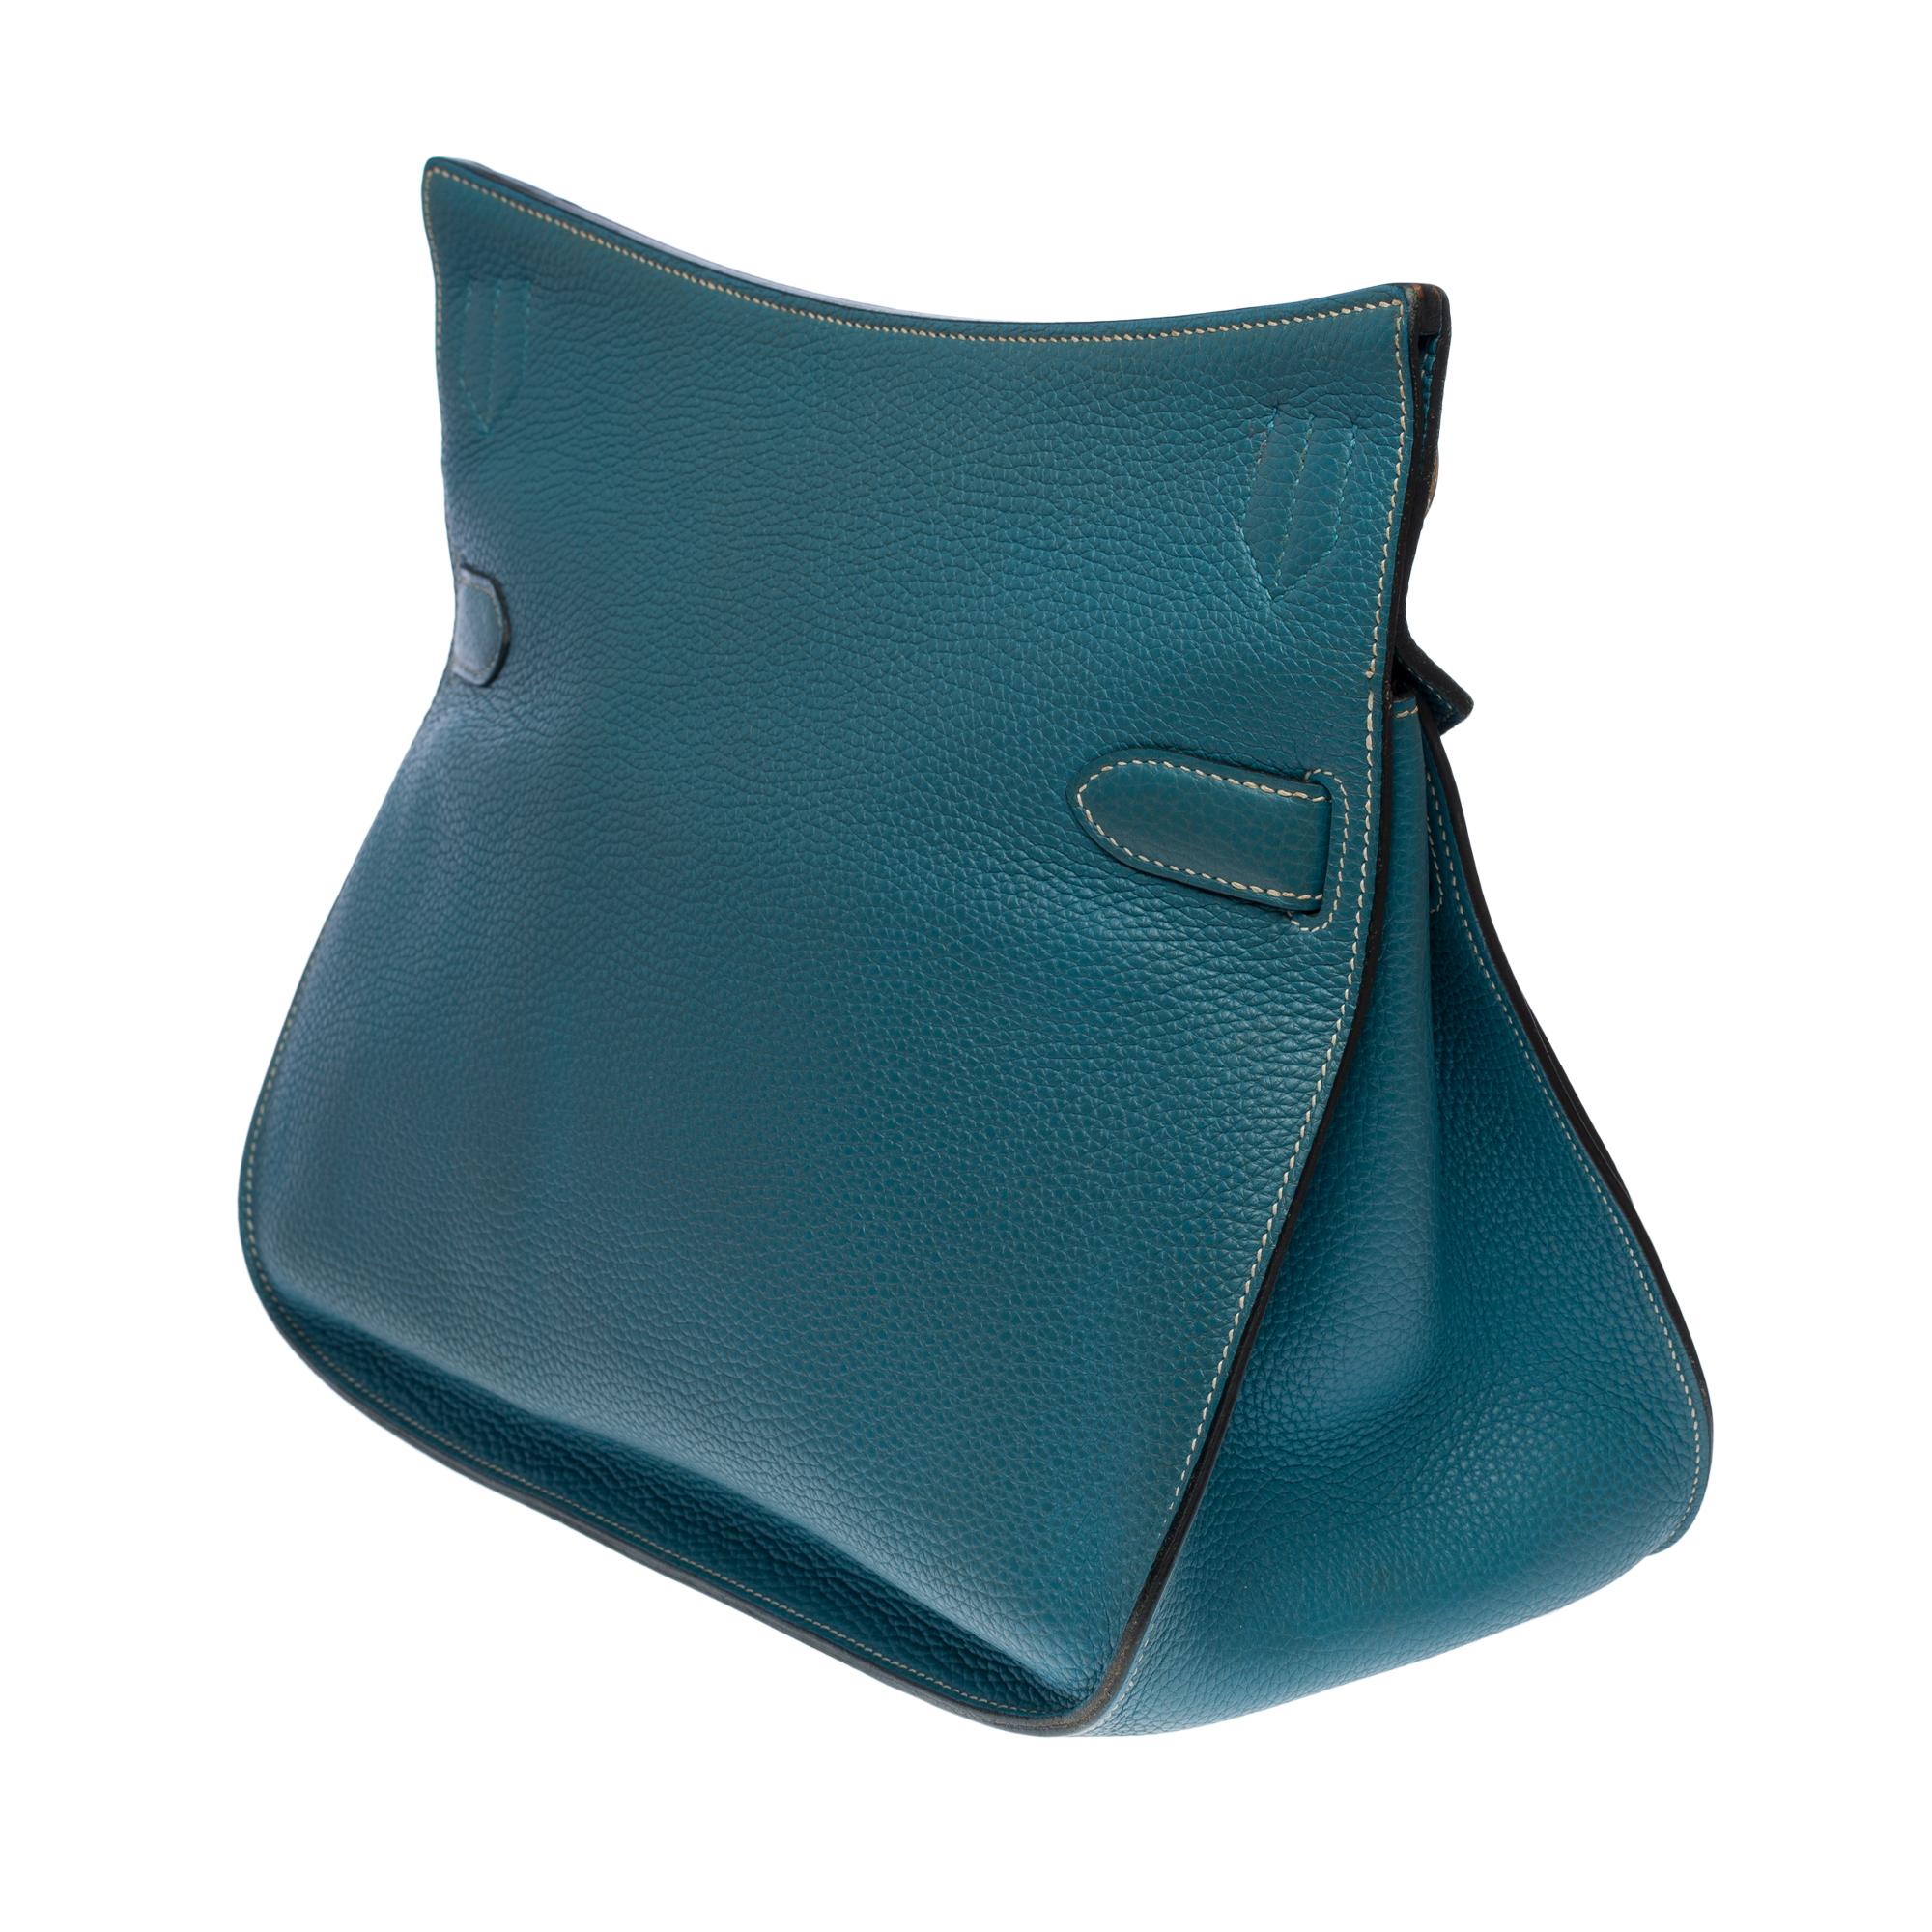 Gorgeous Hermès Jypsière 32 crossbody bag in Blue Jean Taurillon leather, PHW 2